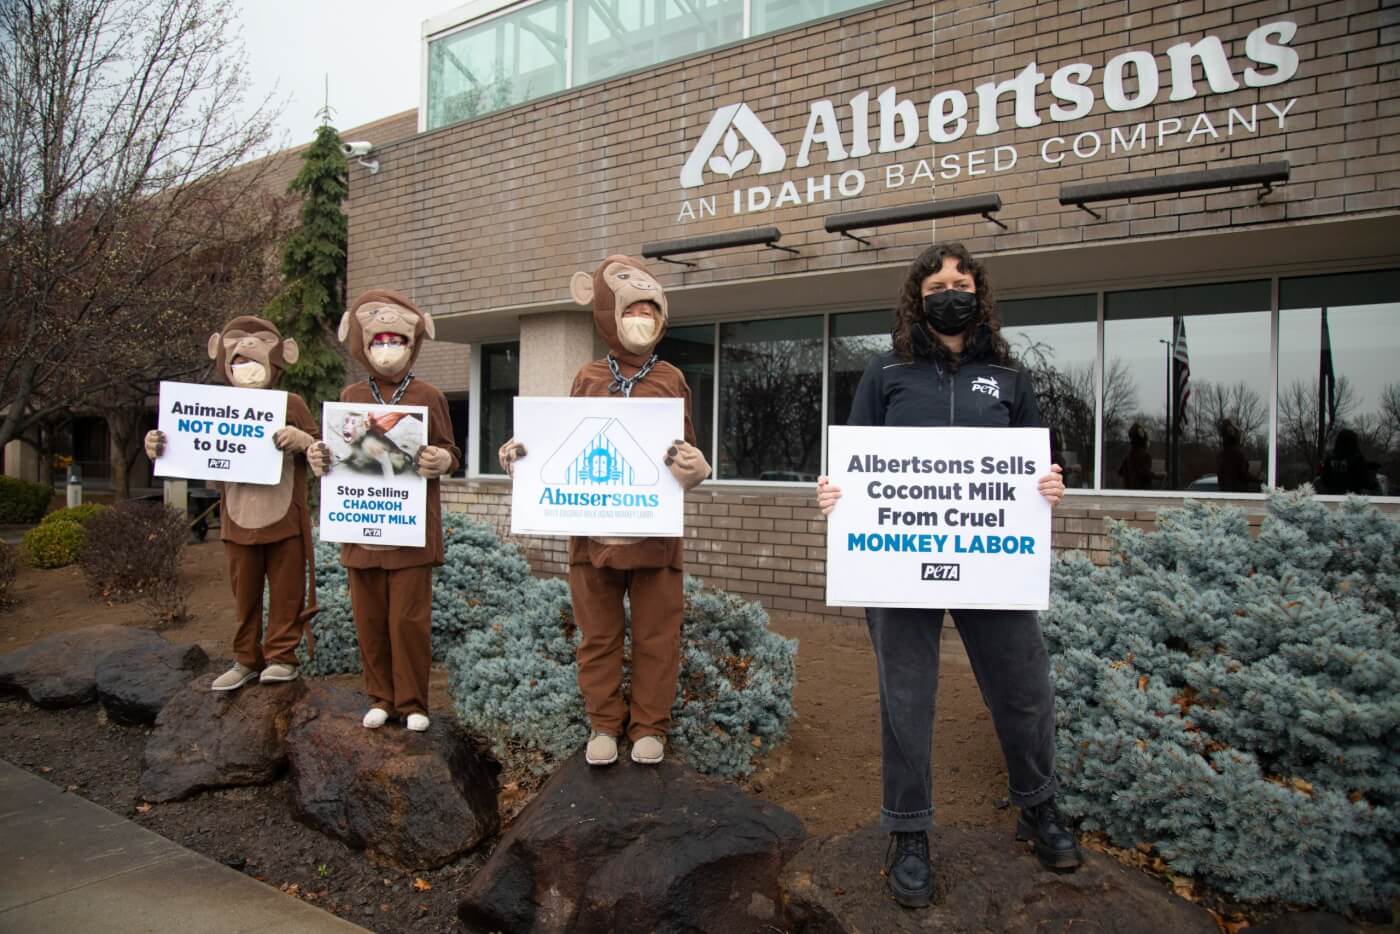 Monkeys protesting Albertsons sale of coconut milk using monkey labor